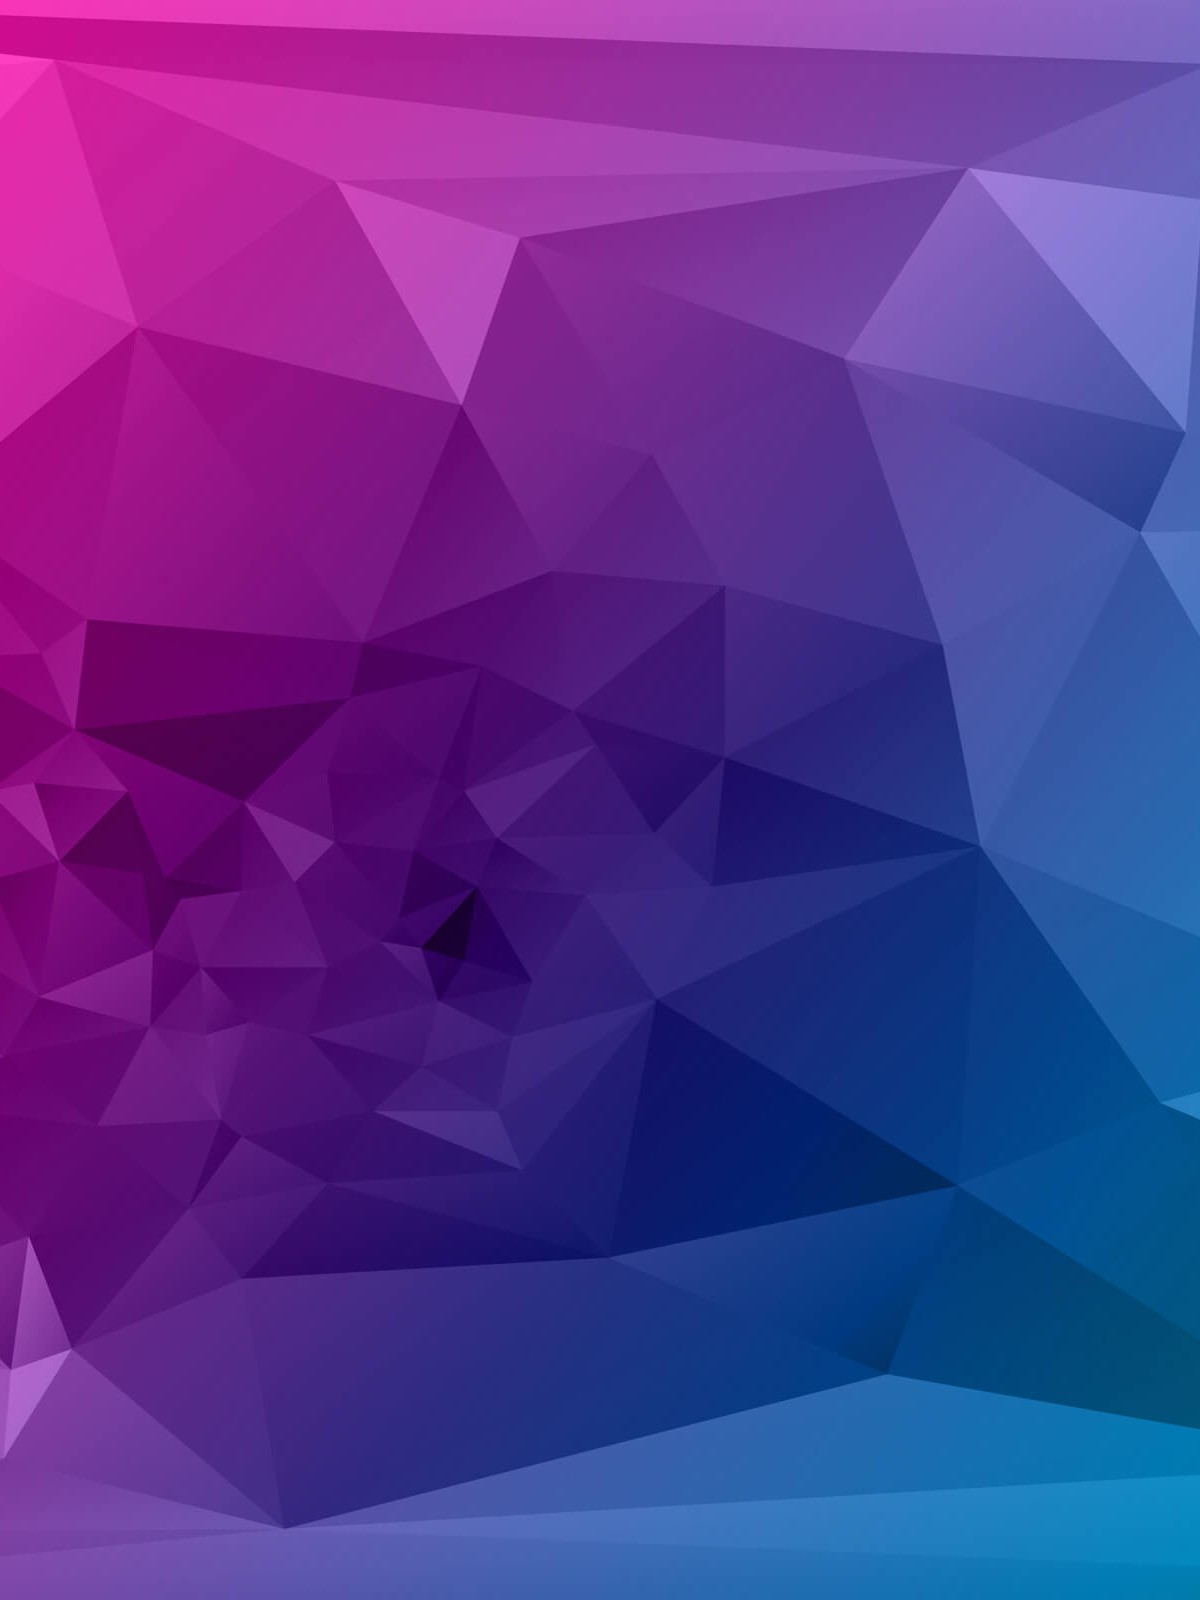 Purple Polygonal Background HD Wallpaper For Kindle Fire HDx